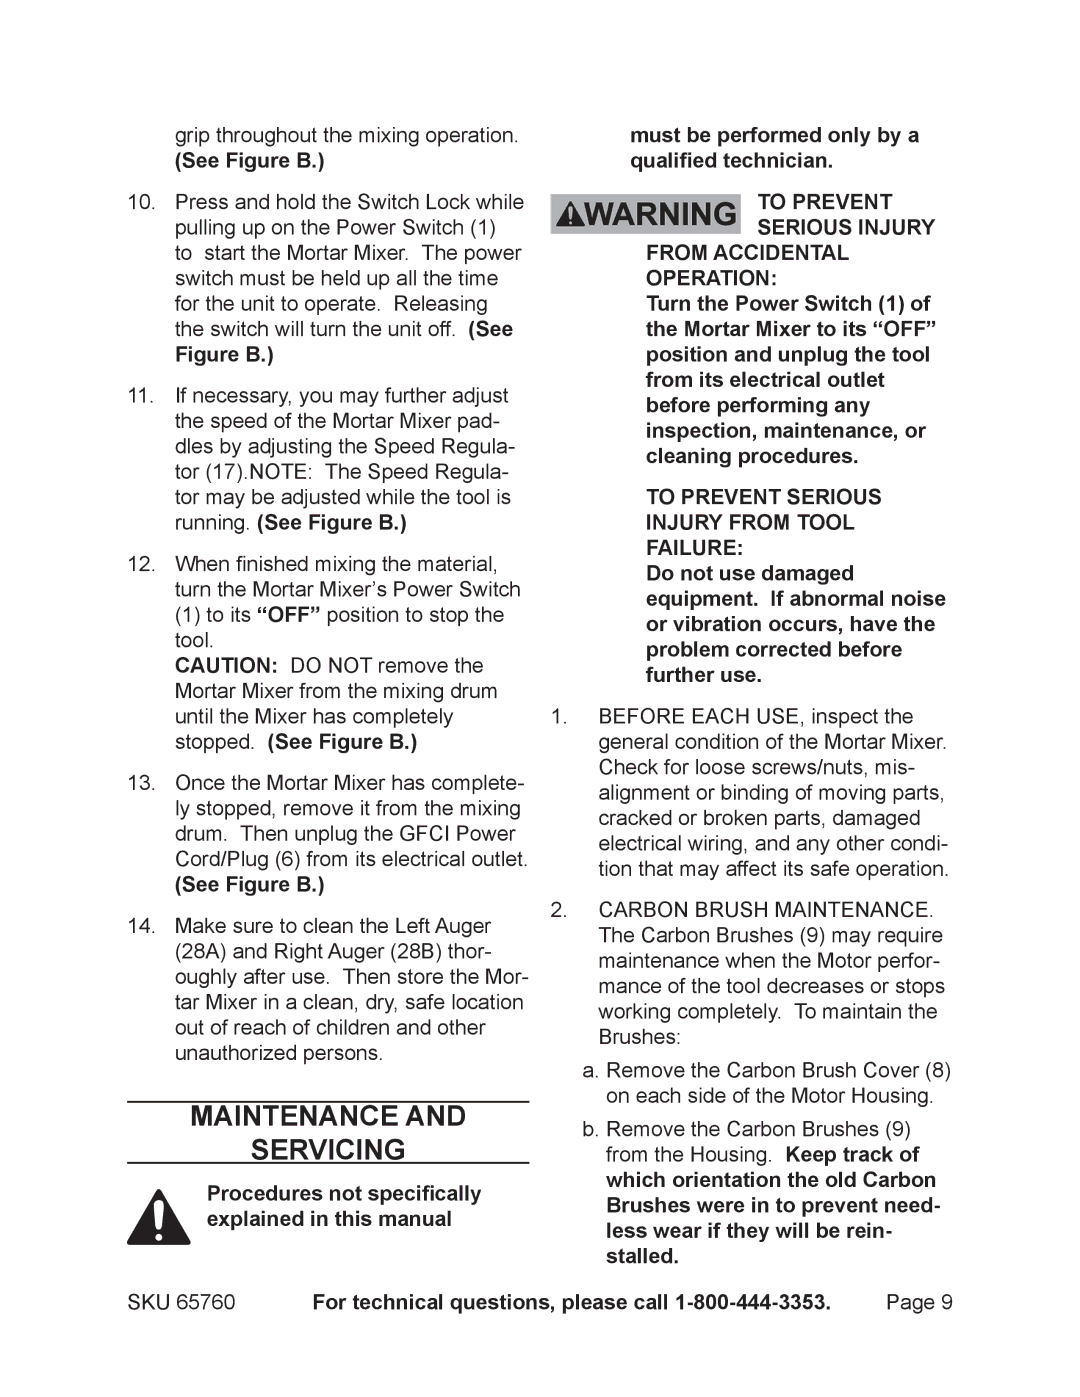 Chicago Electric 65760 manual Maintenance Servicing, Figure B 